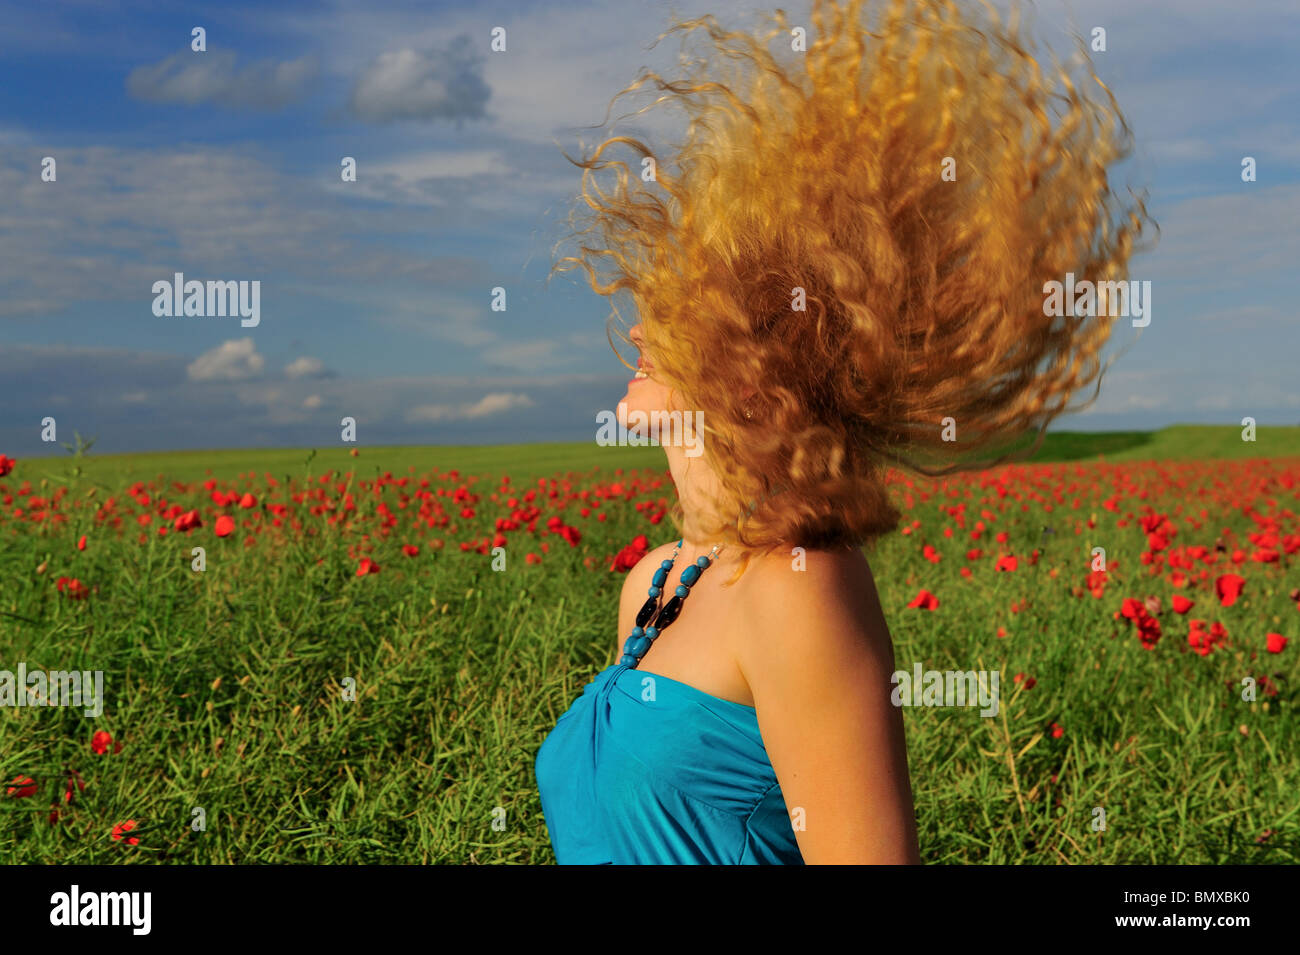 Girl, spring, positiv emotion,mindfulness, mentalhealth, Mindfulness,life force Stock Photo